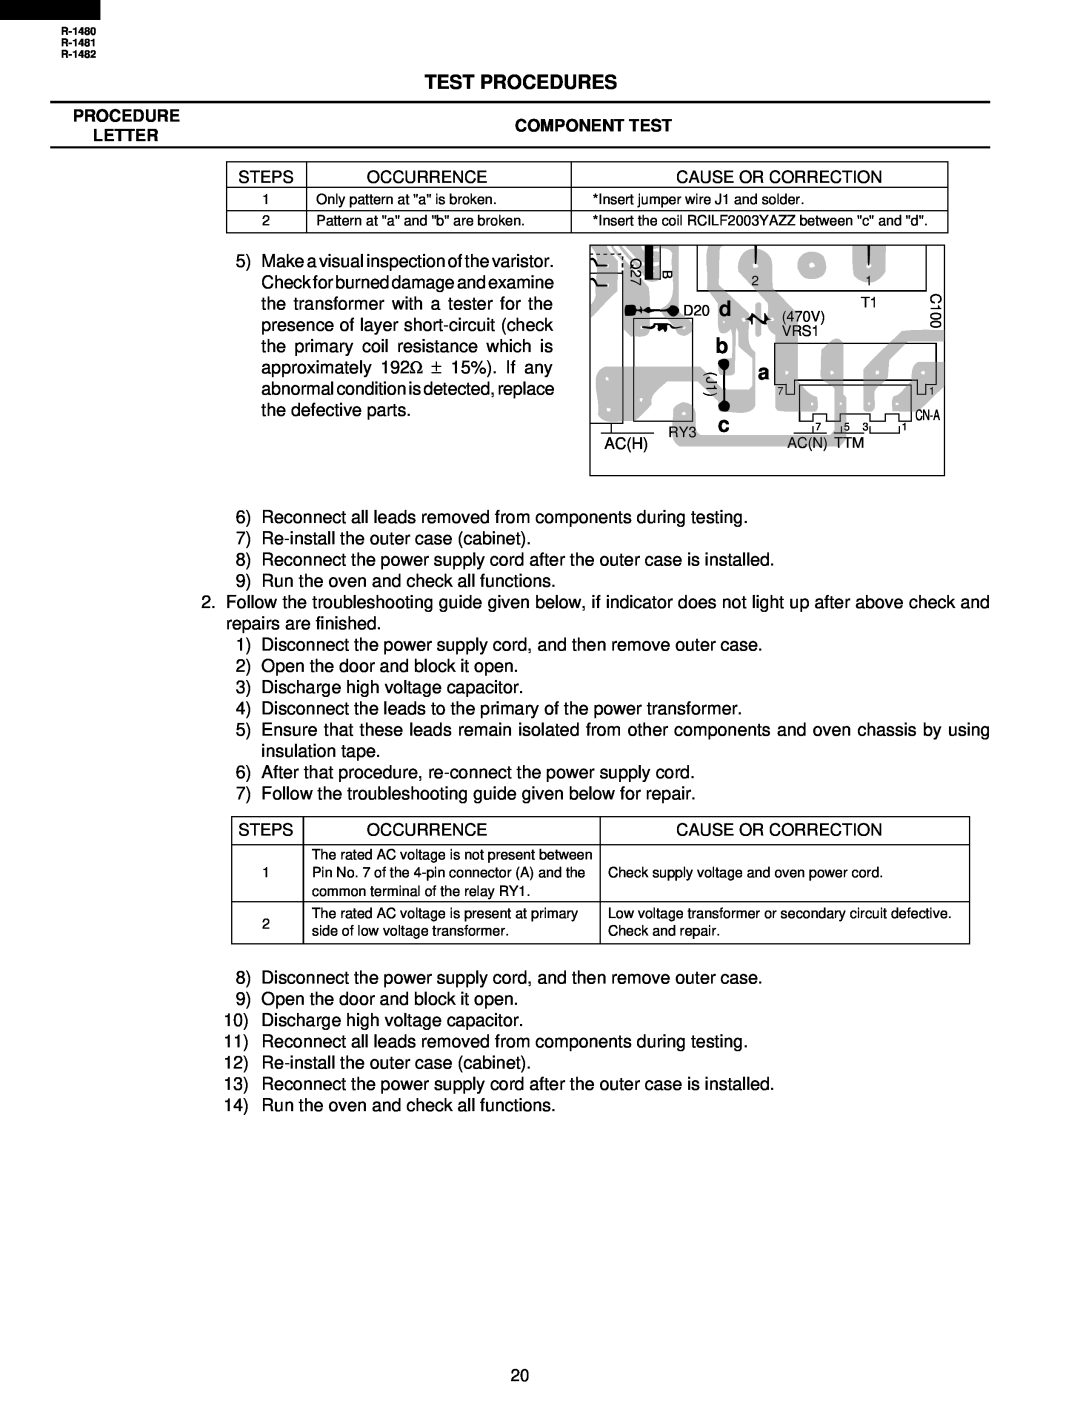 Sharp R-1482, R-1480, R-1481 service manual Test Procedures, Component Test, Letter 